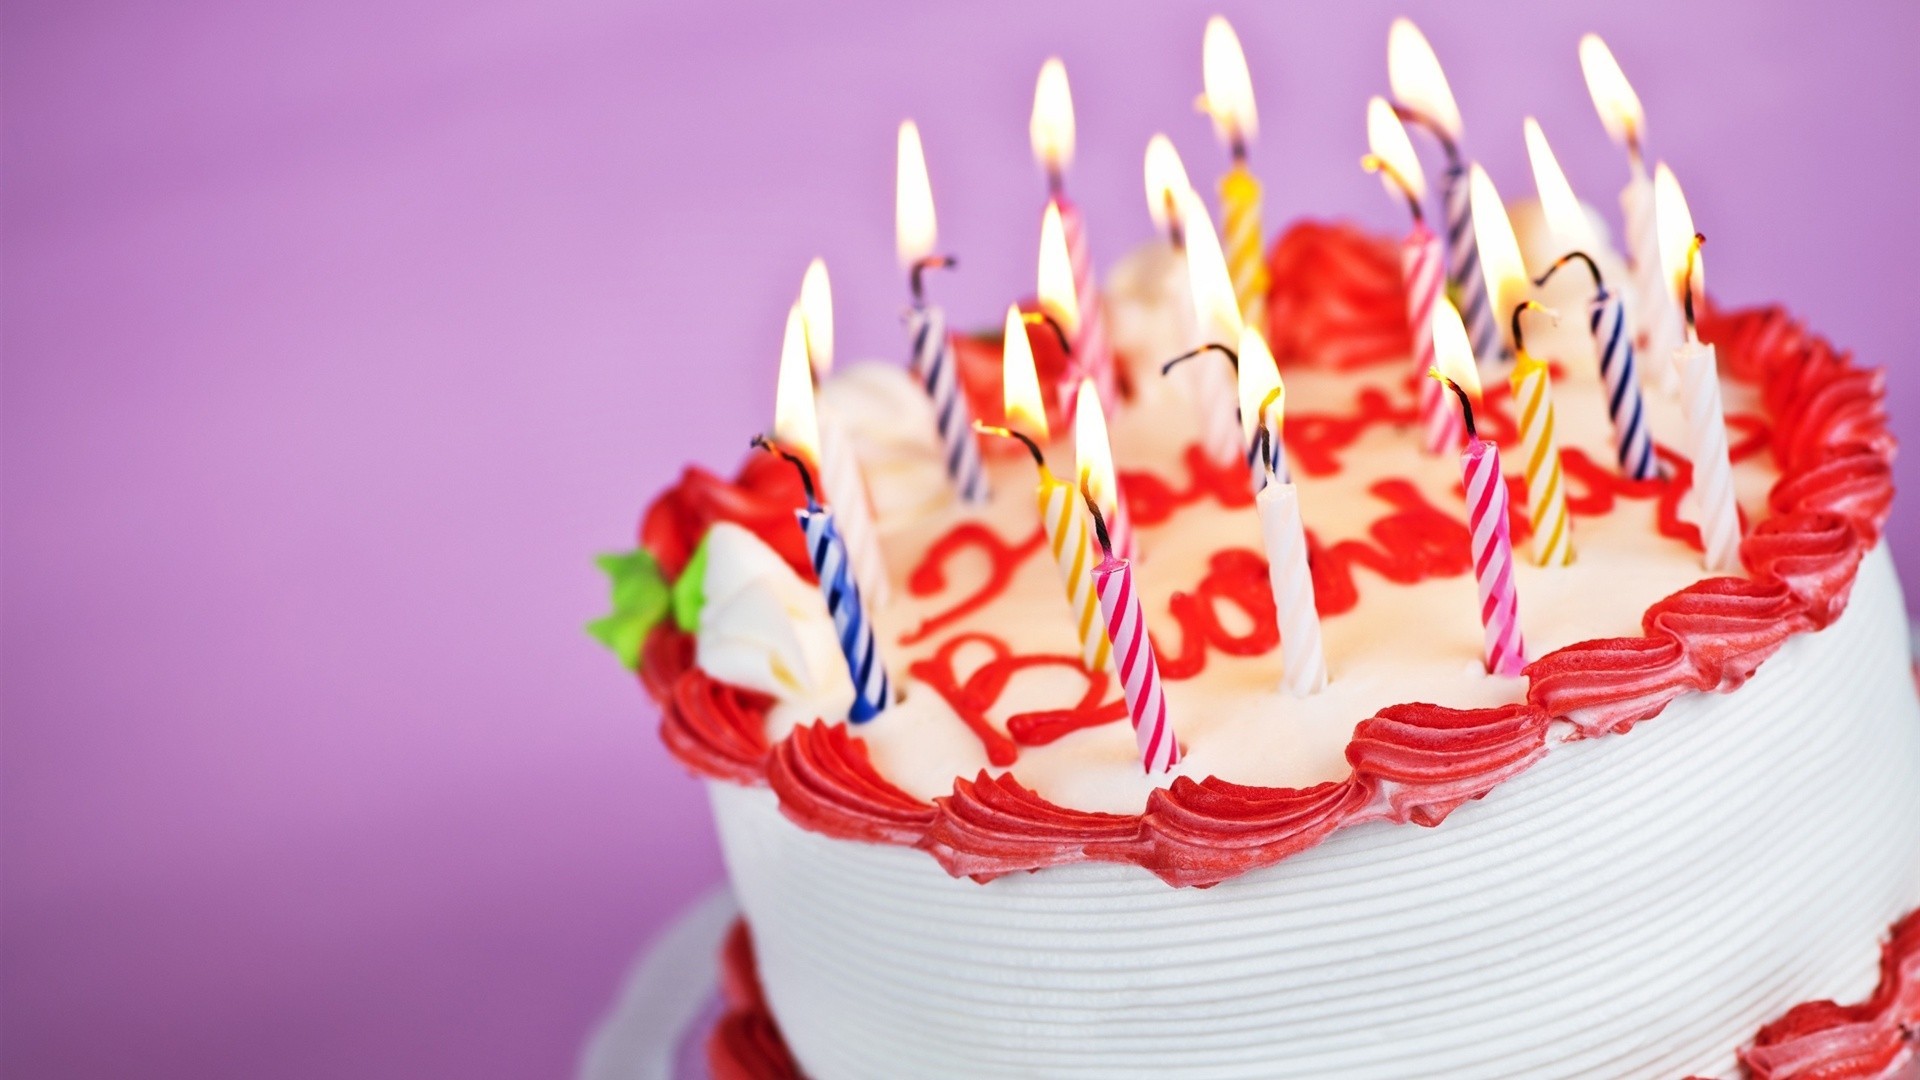 gambar kue ulang tahun sederhana